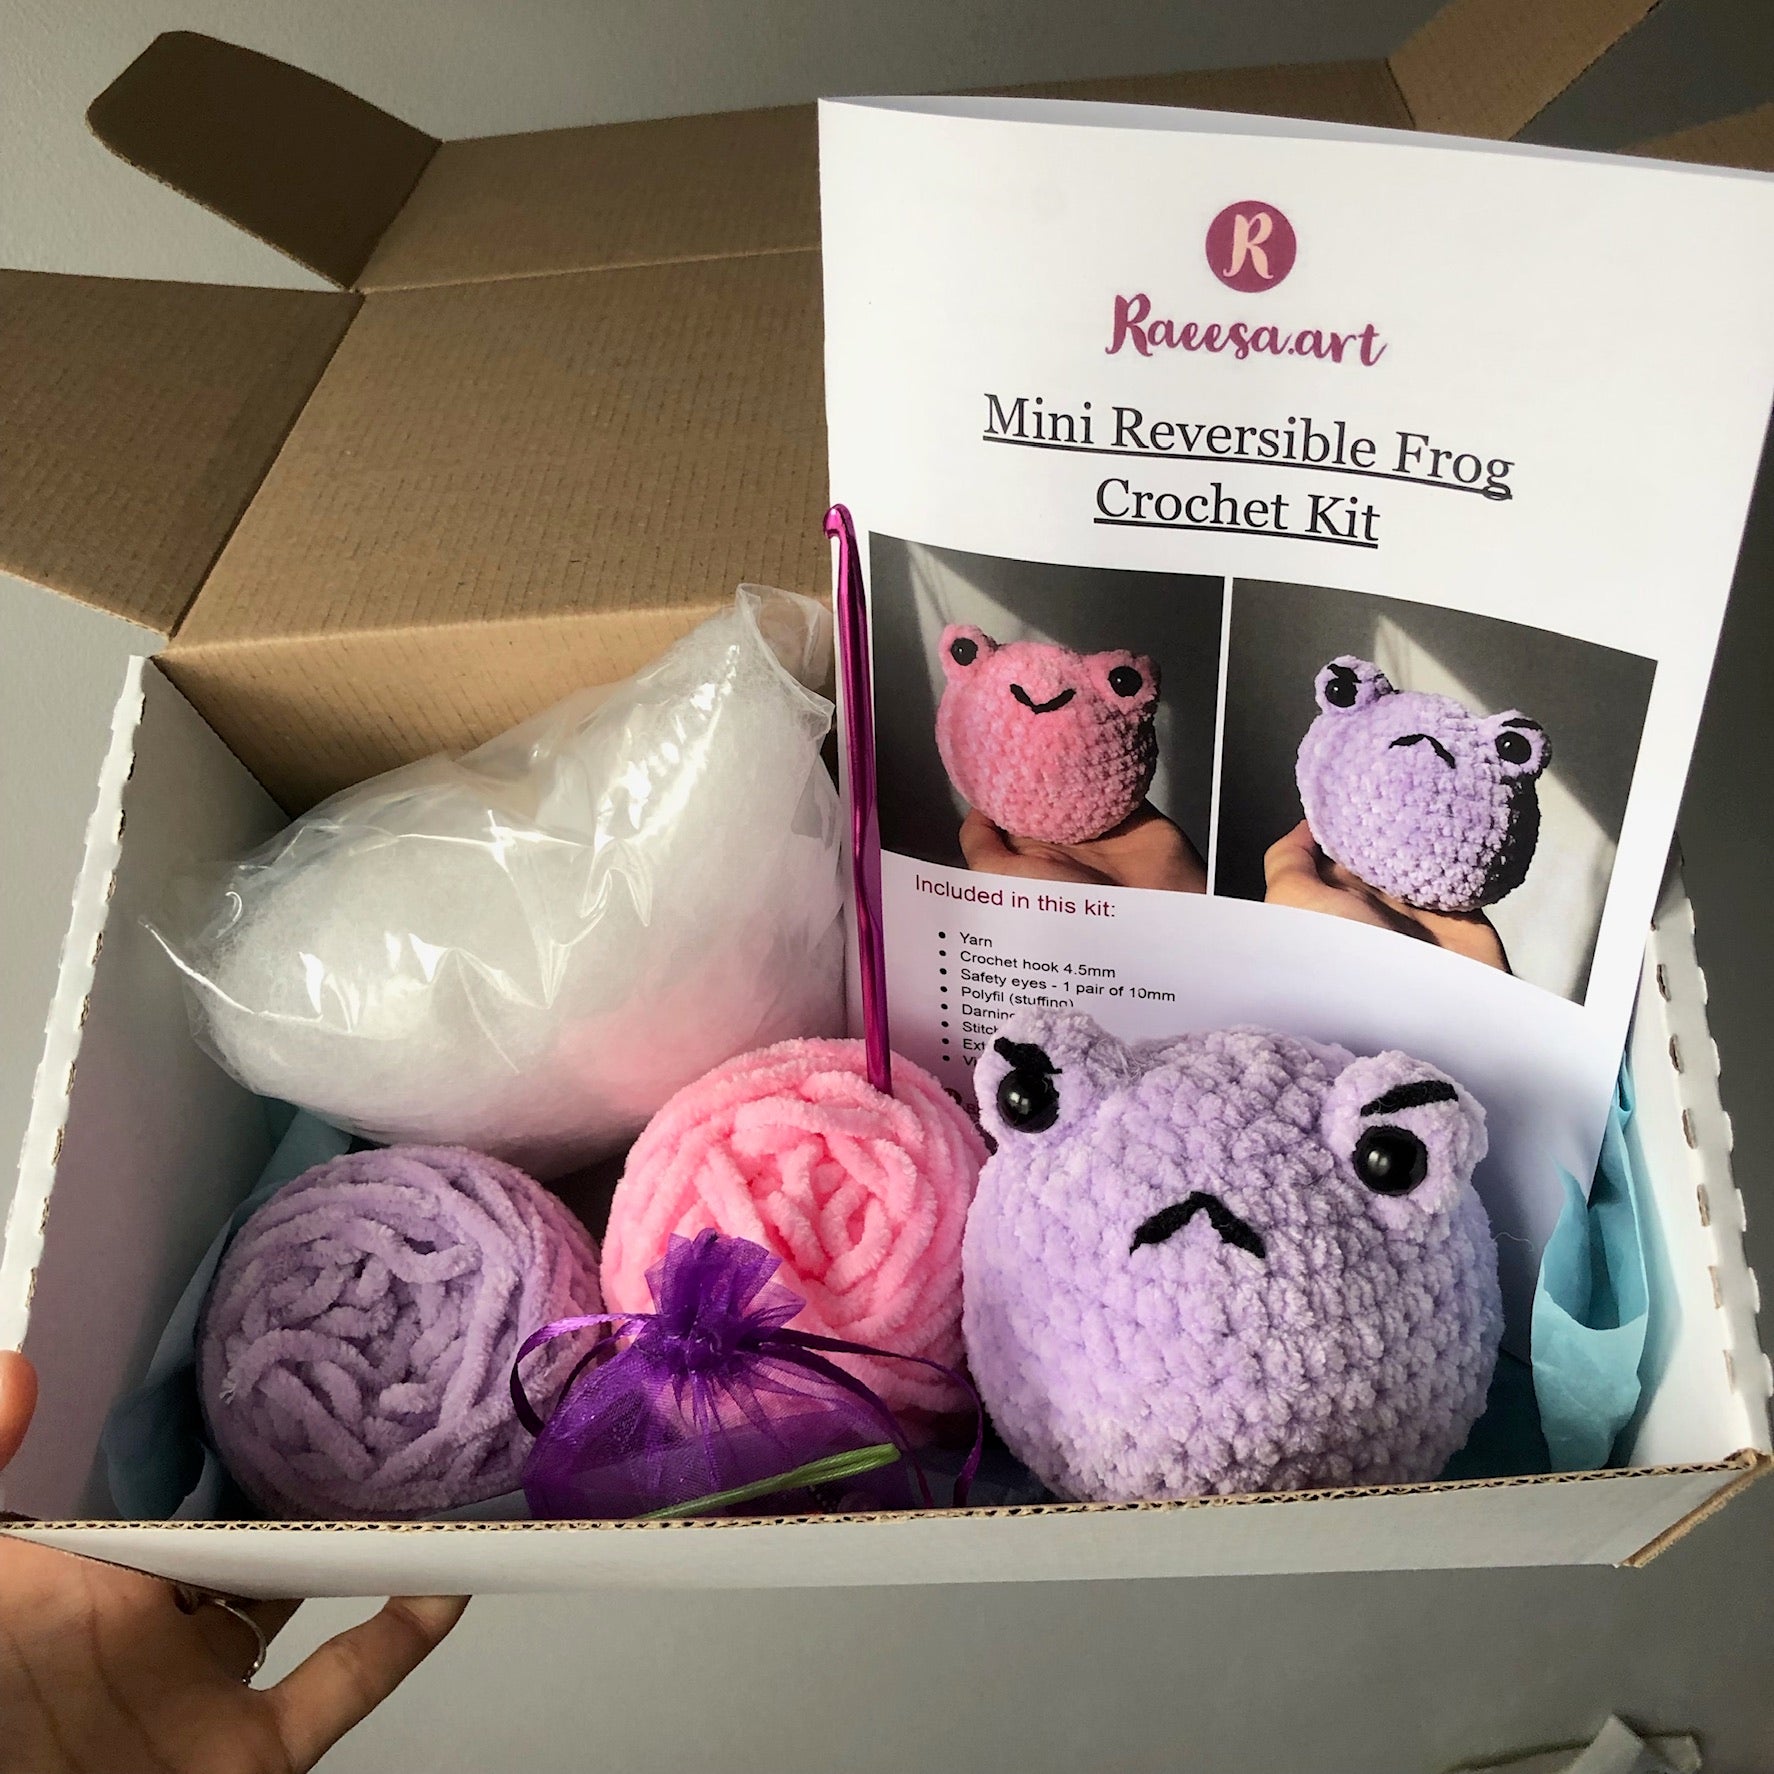 Xanadued Crochet Kit for Beginners, Crochet Hat Frog Starter Set, Knitting  Kit for Beginners Adults, Easy Learn to Crochet Kit with Tutorial and